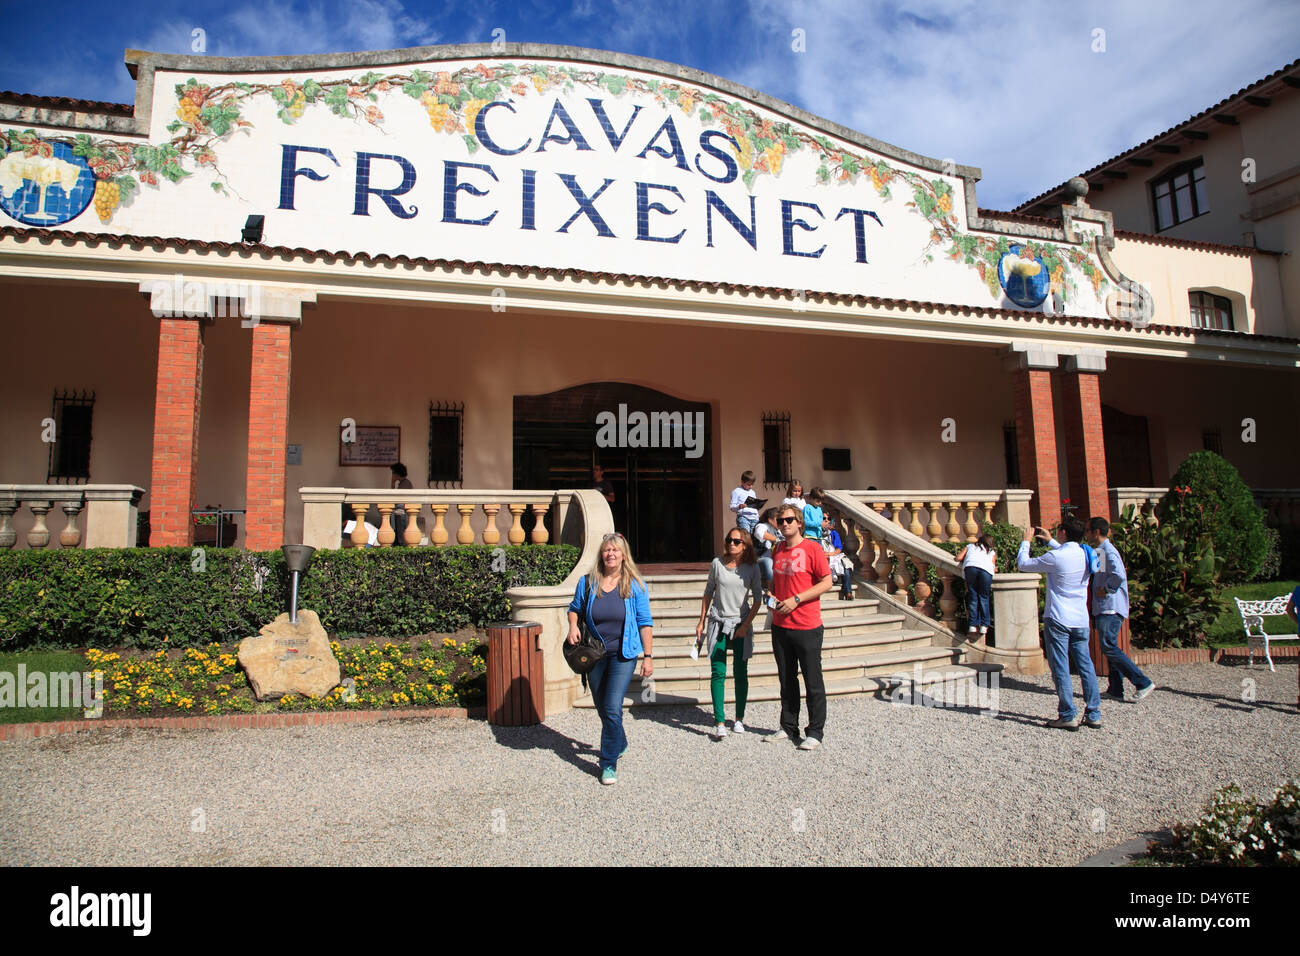 Freixenet cava producer Sant Sadurni de Anoia Penedes region near Barcelona, Spain Stock Photo